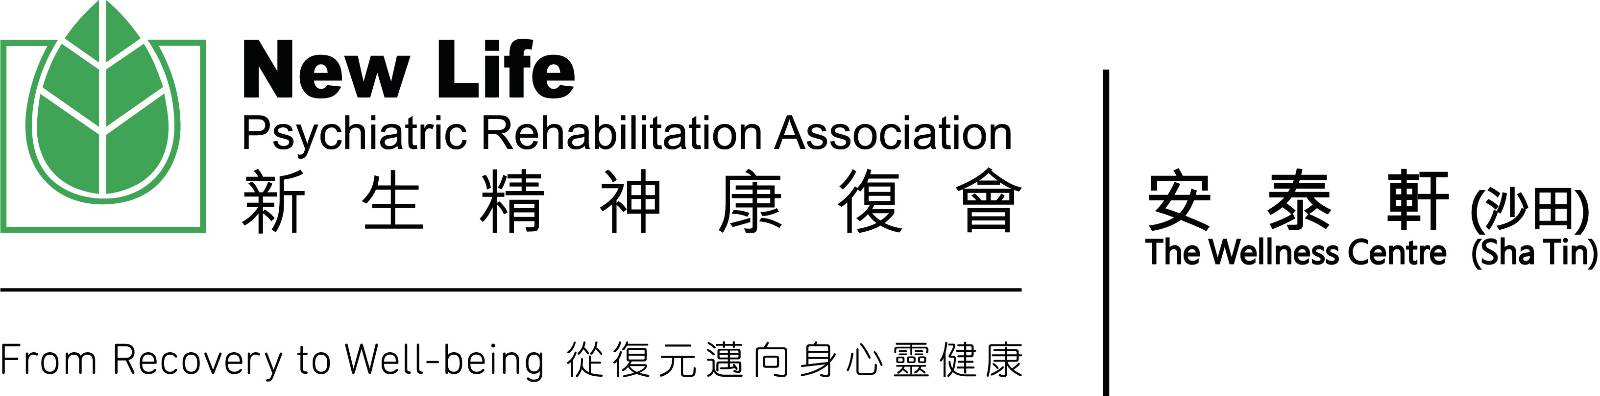 New Life Psychiatric Rehabilitation Association